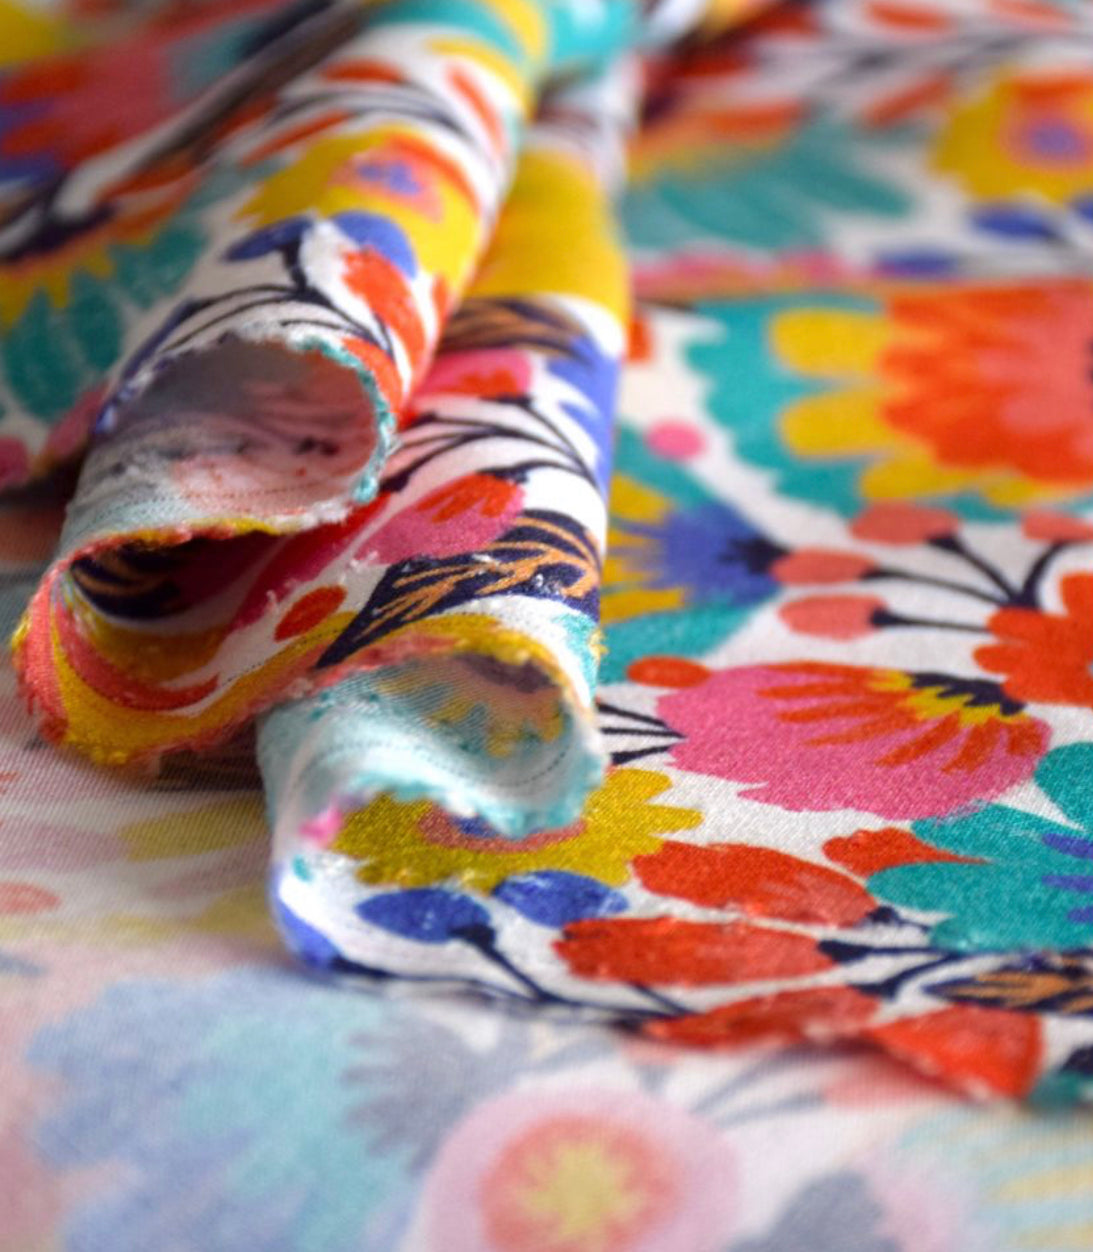 Cousette - Phoenix Flowers Viscose Fabric